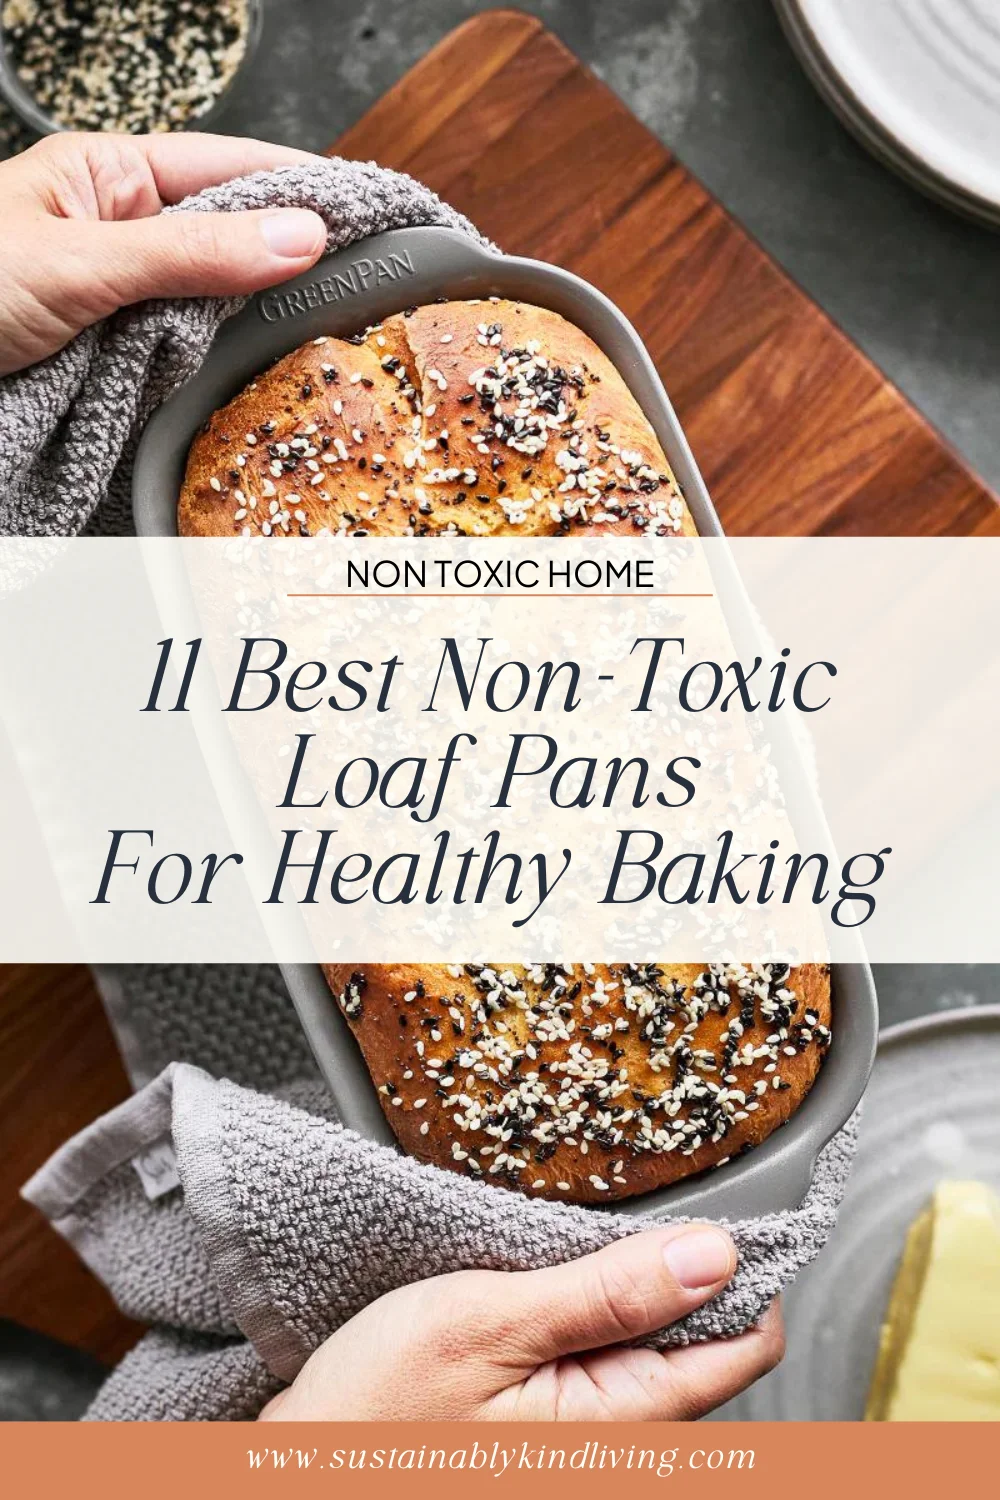 nontoxic loaf pans